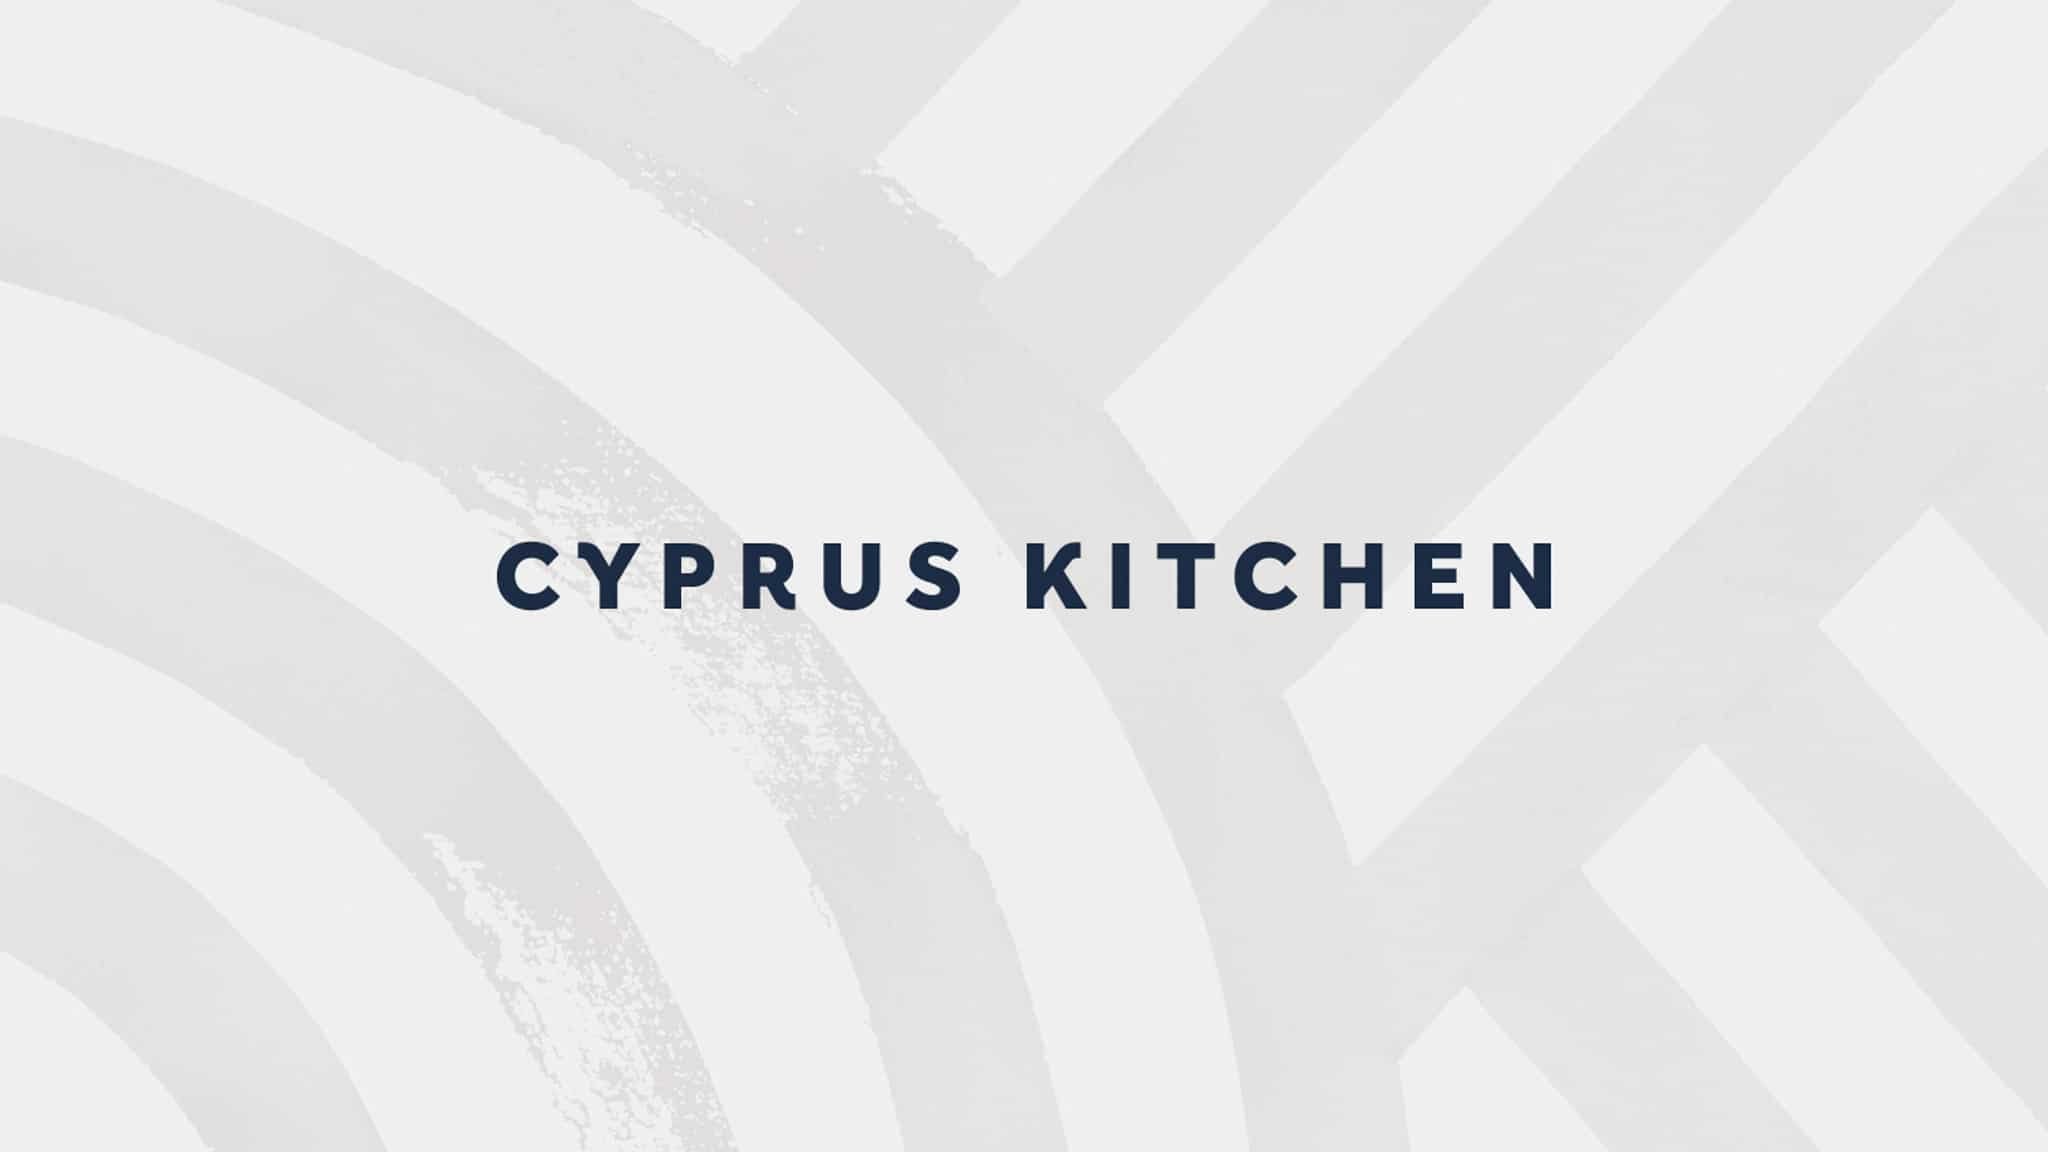 Cyprus Kitchen Logotype